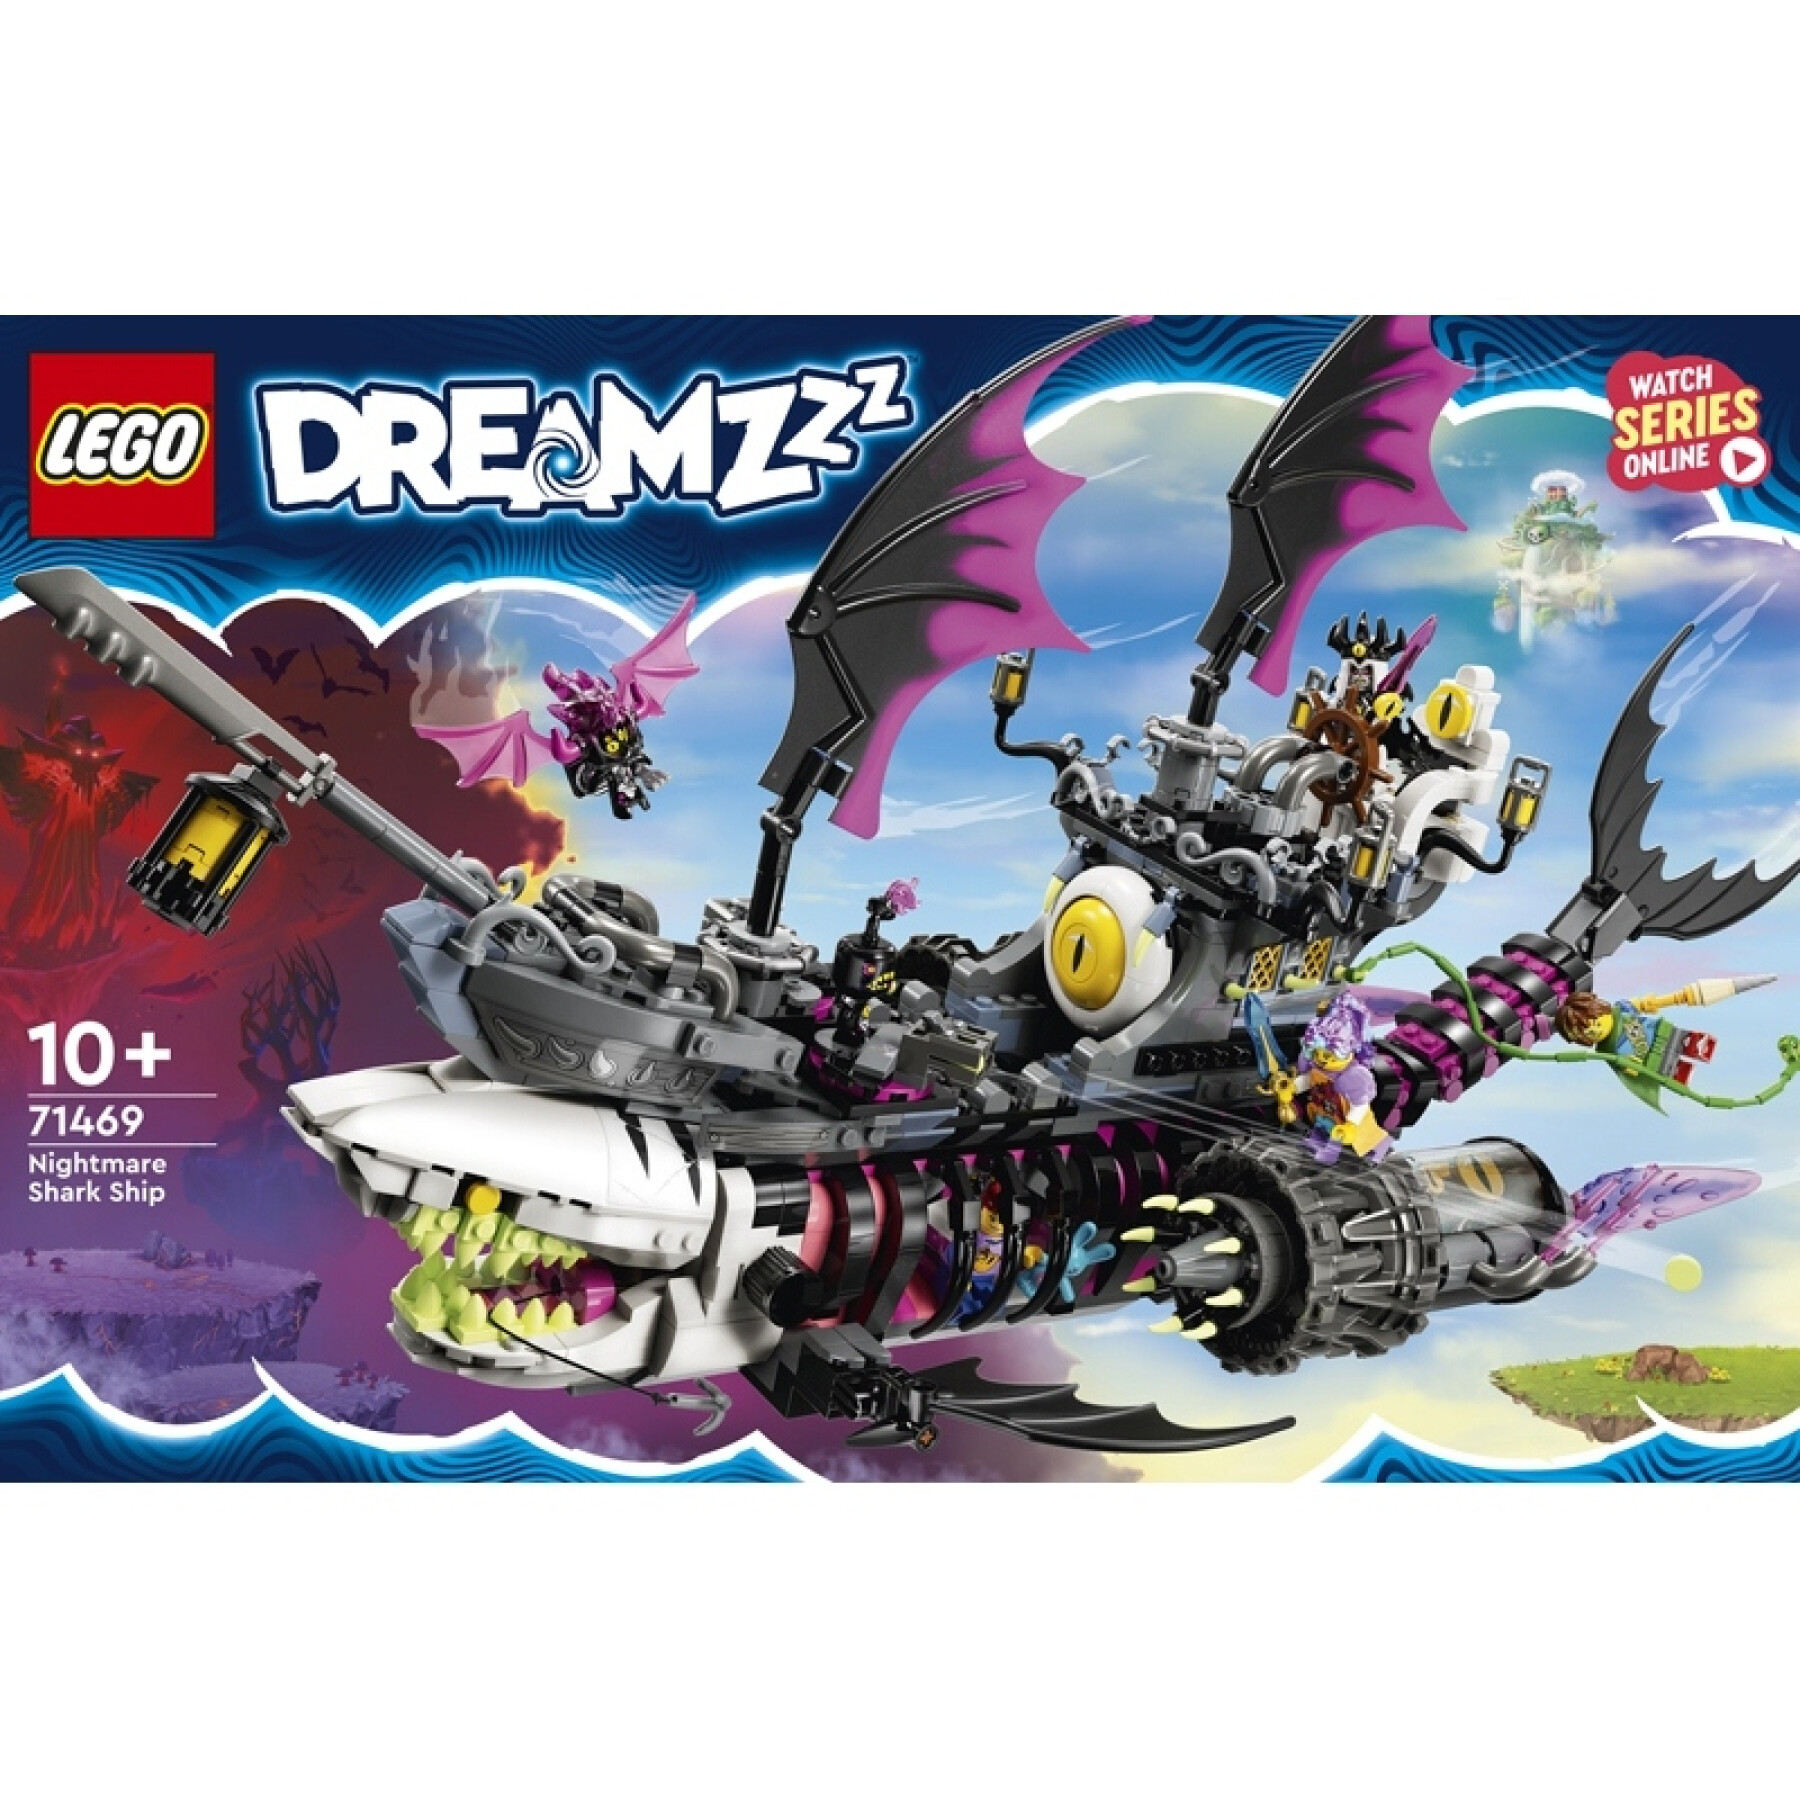 Set di costruzione Lego Sharkship Titan